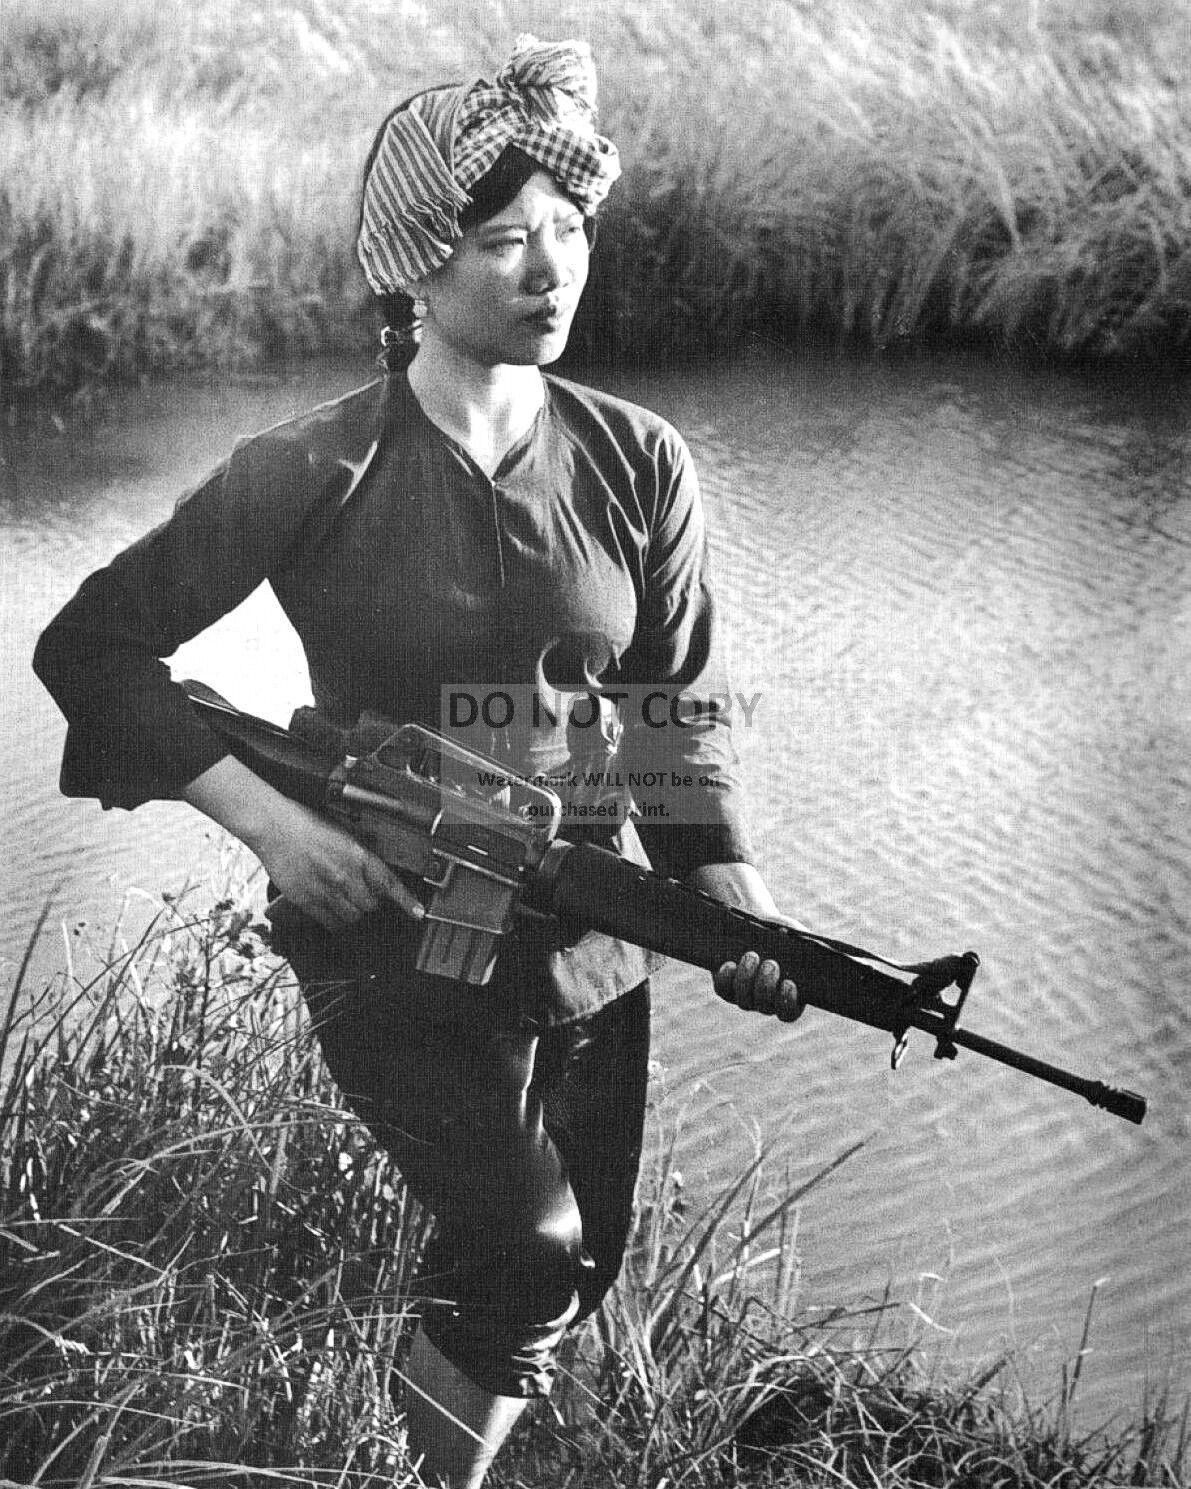 FEMALE VIET CONG 18 YEARS OLD IN 1972 DURING VIETNAM WAR - 8X10 PHOTO (YW004)